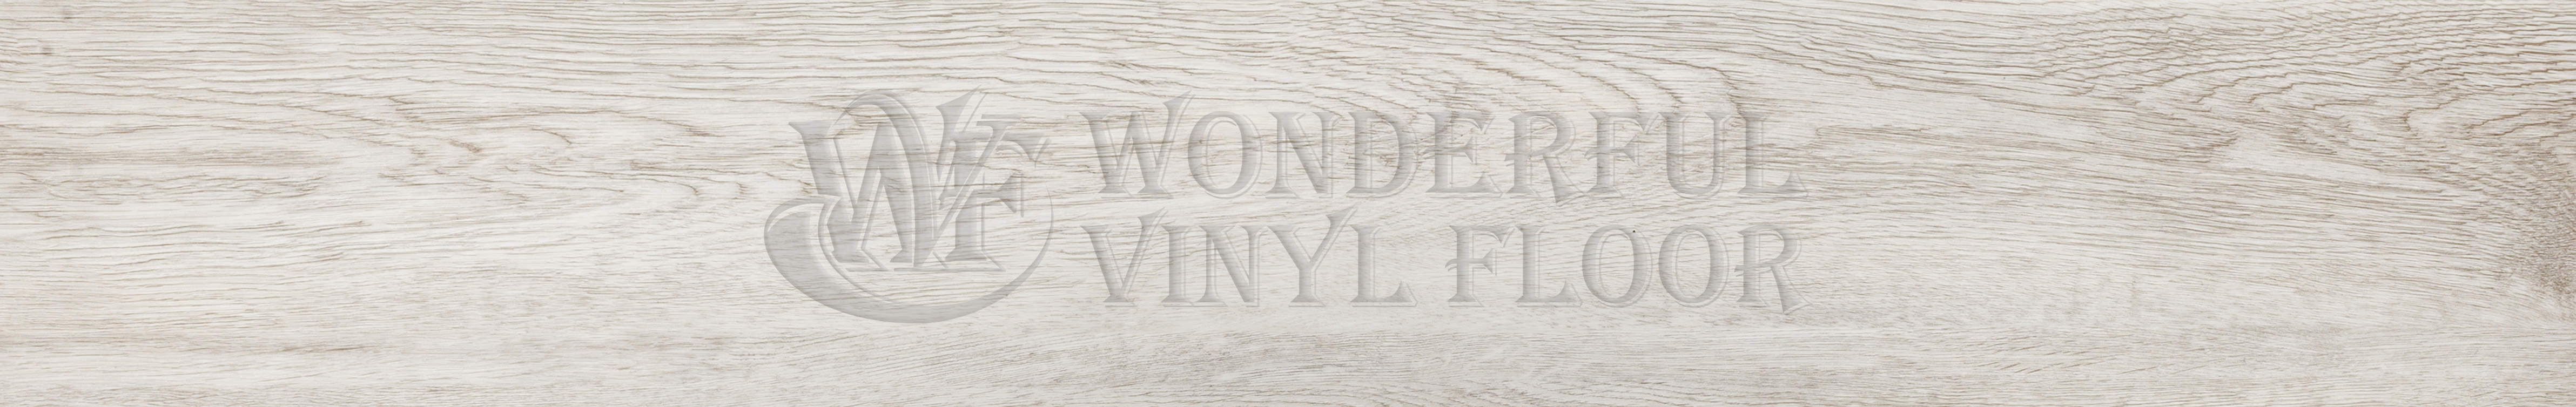 Wonderful Vinyl Floor DE1505 Снежный